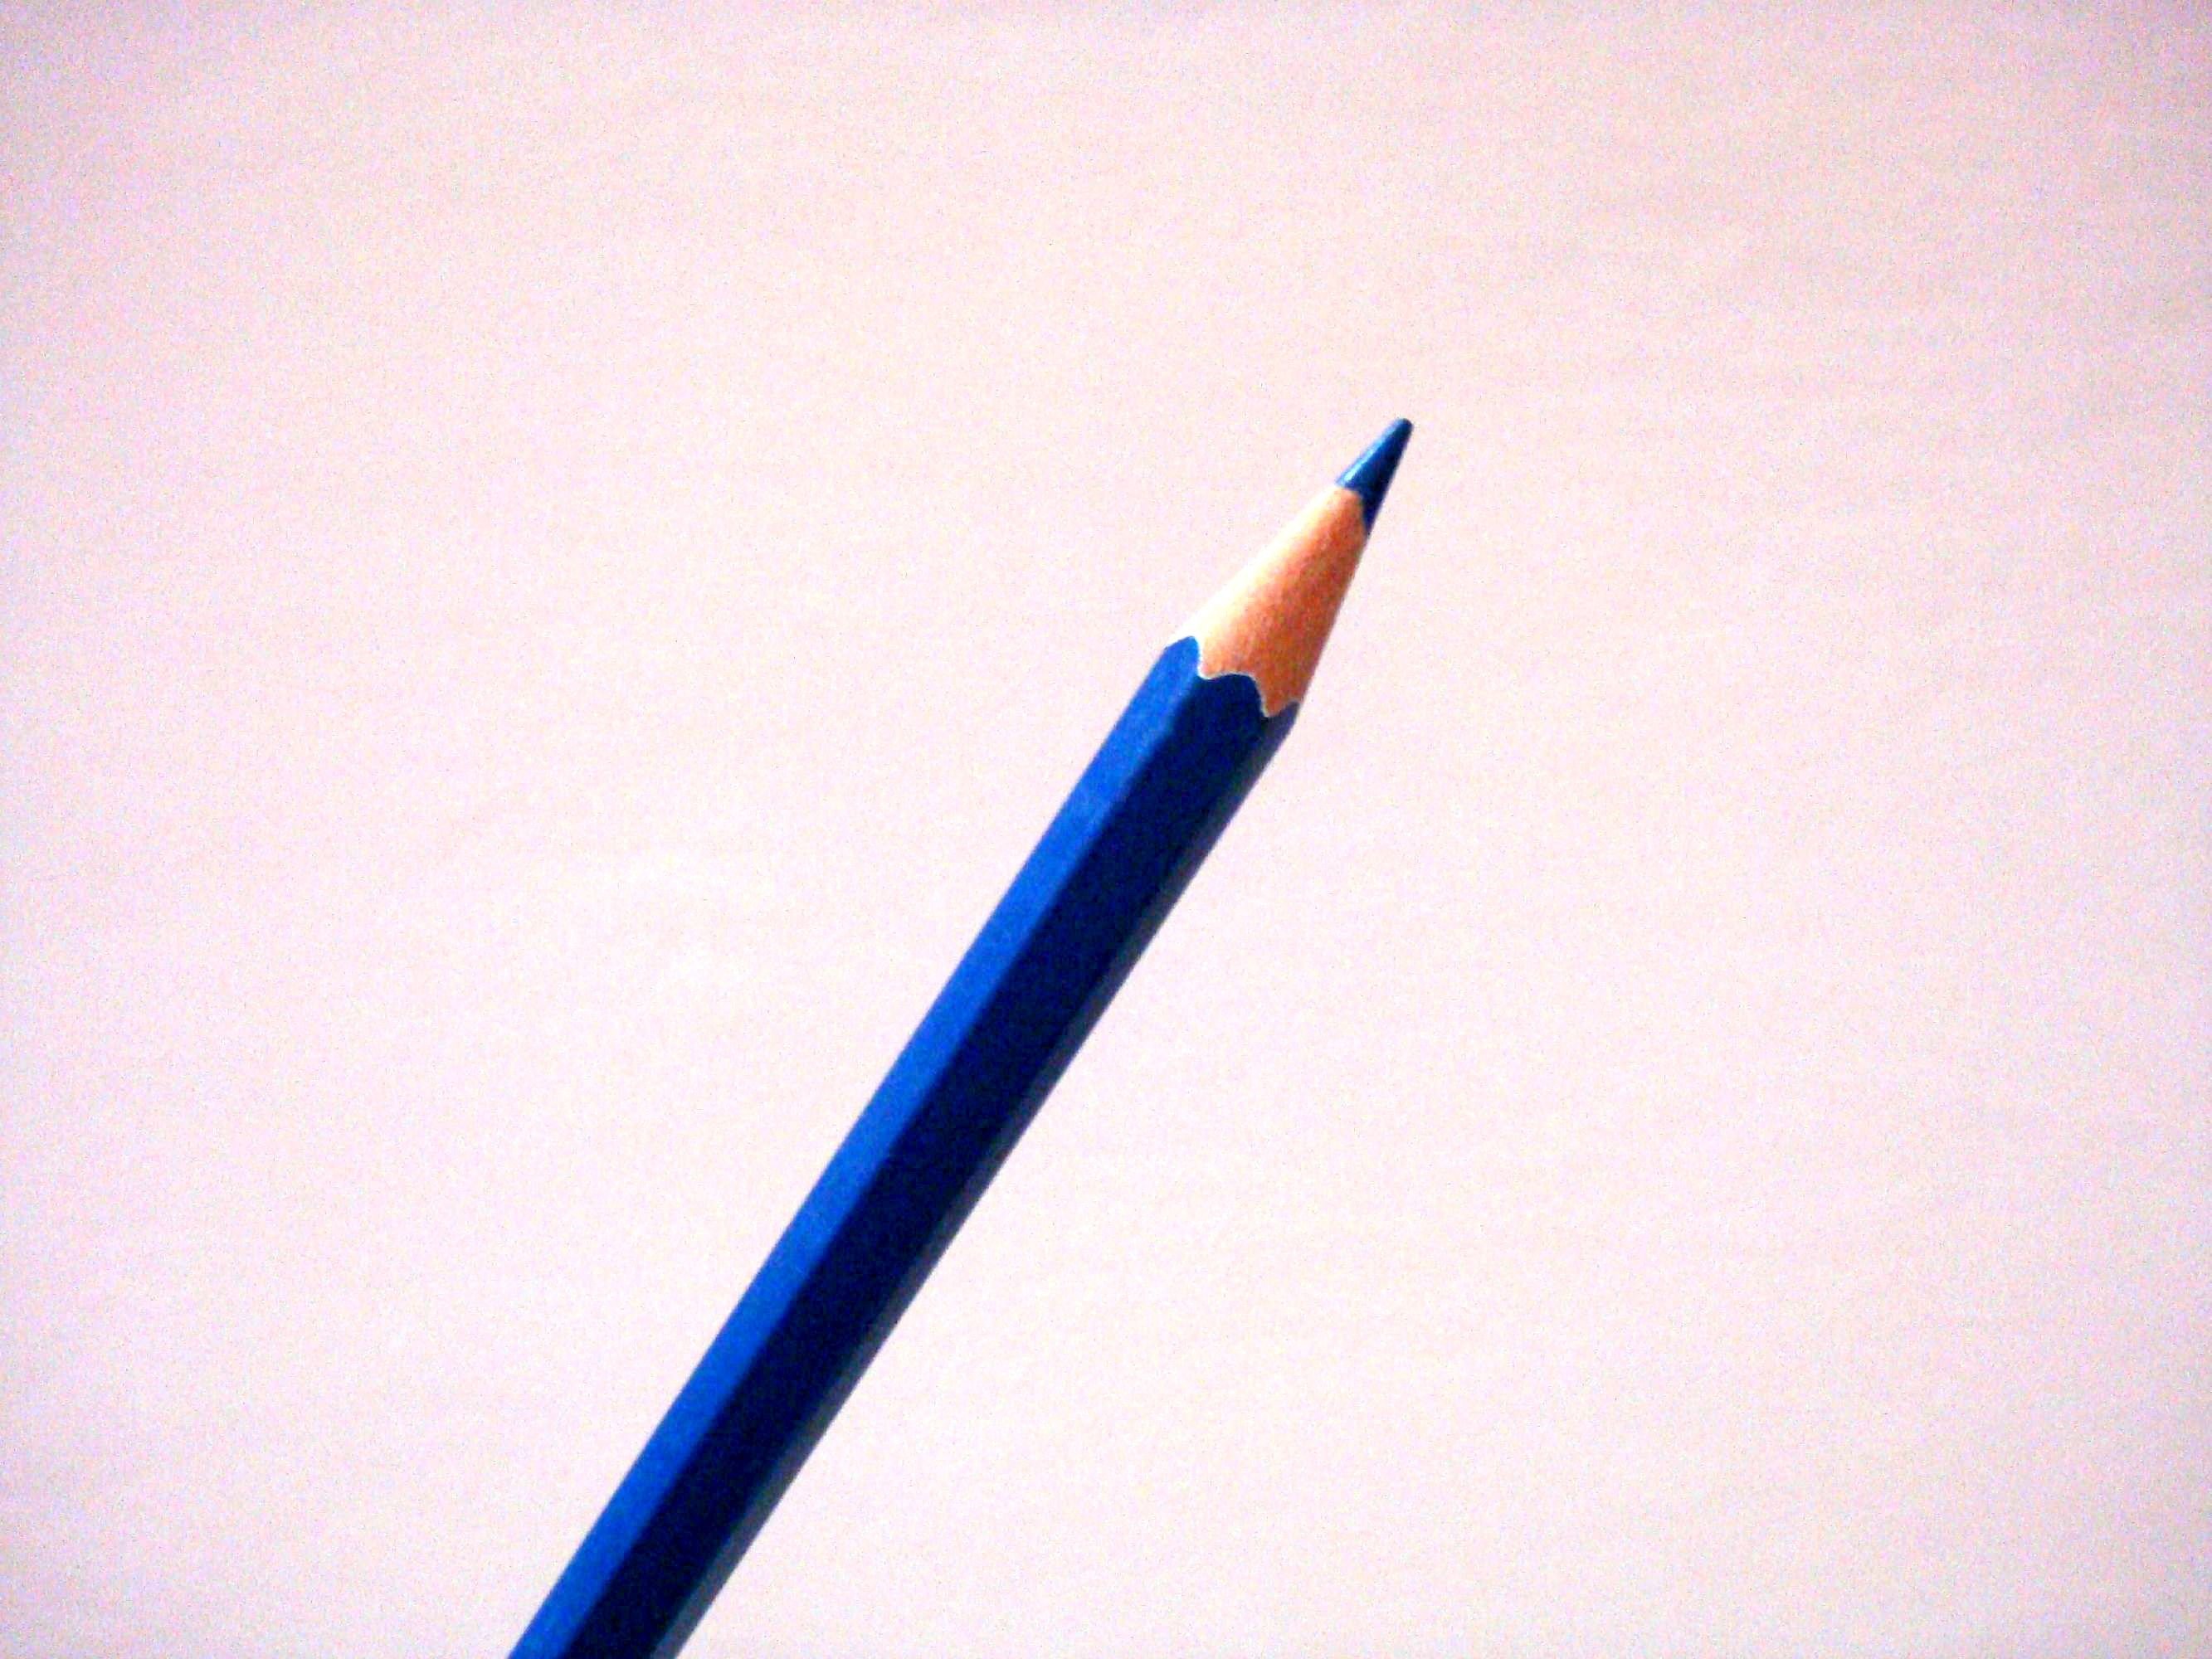 Pencil windows. Карандаш. Голубой карандаш. Голубой карандаш для рисования. Синий карандаш на белом фоне.